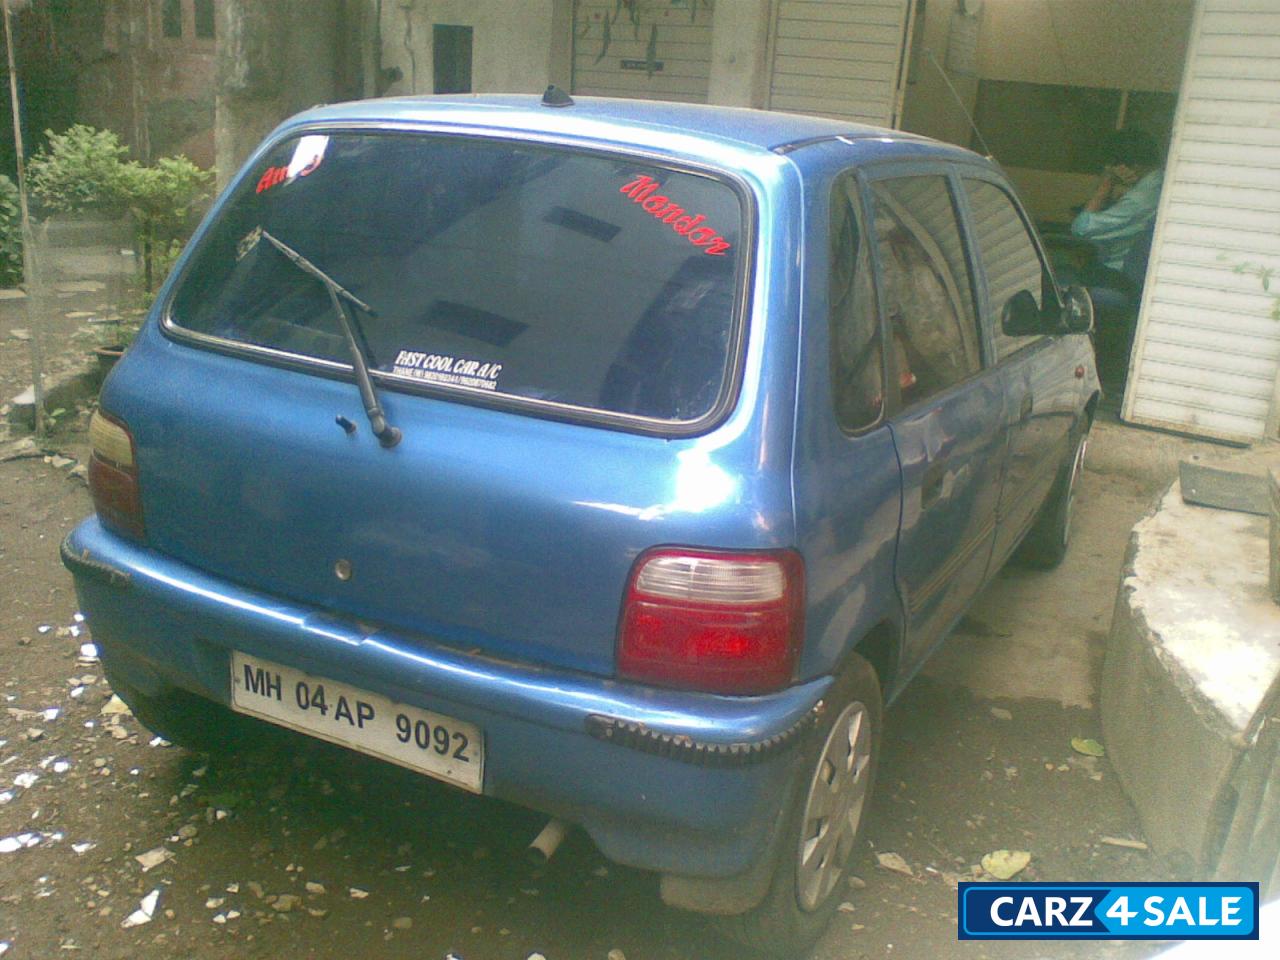 Cyprus Blue Maruti Suzuki Zen Picture 3. Car ID 1232. Car located ...